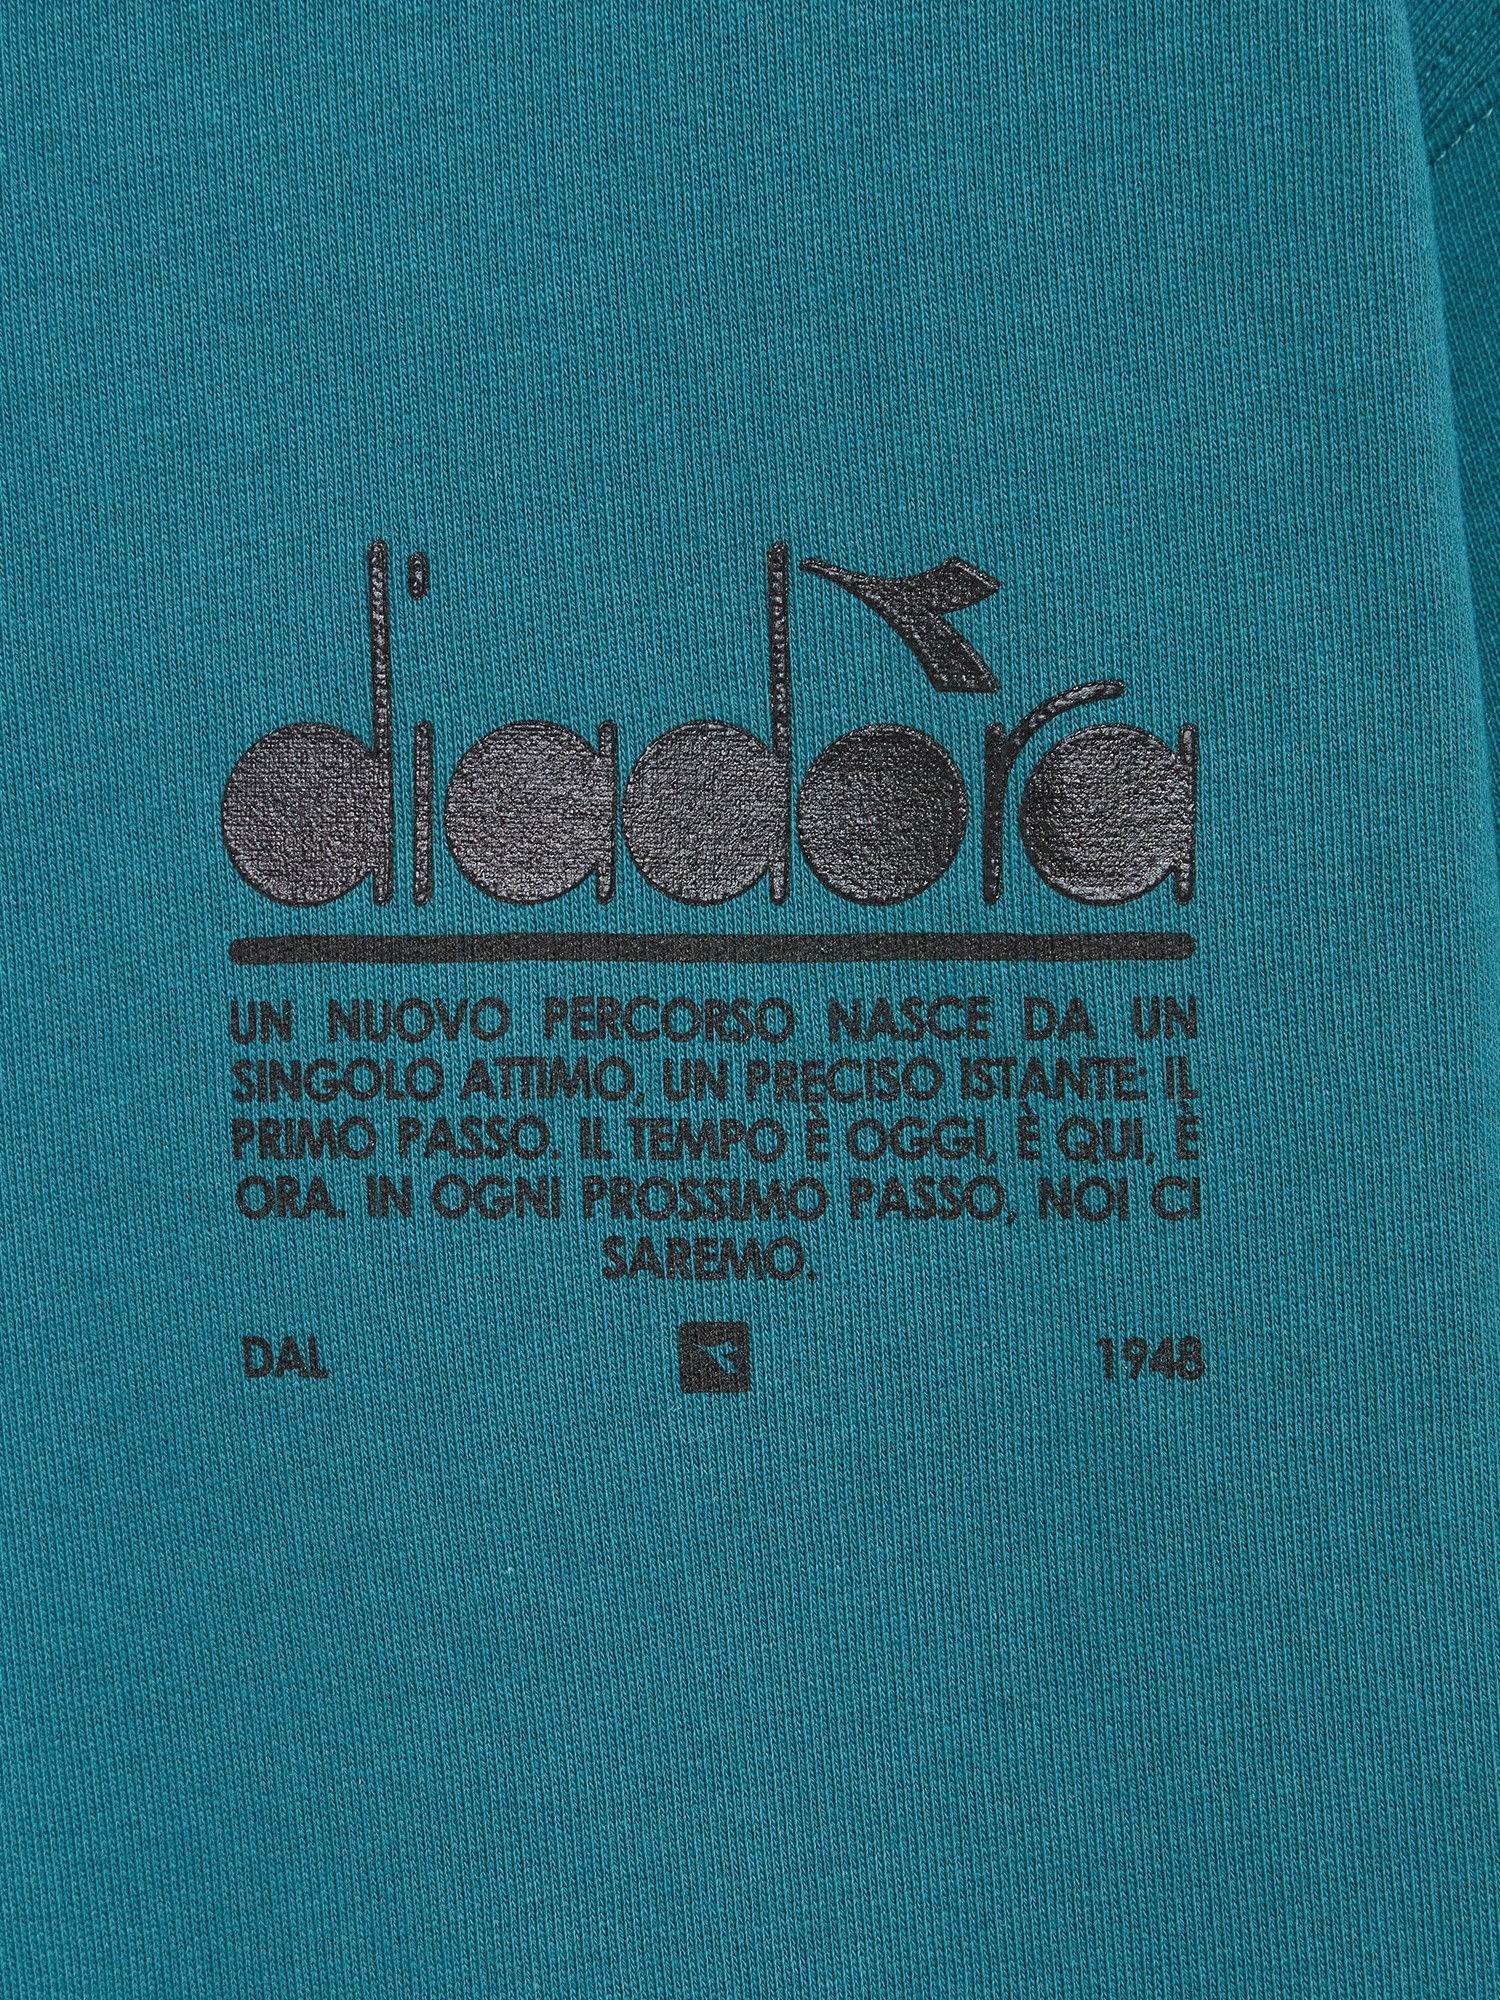 Diadora - Felpa Manifesto con cappuccio in cotone, Petrolio, large image number 1